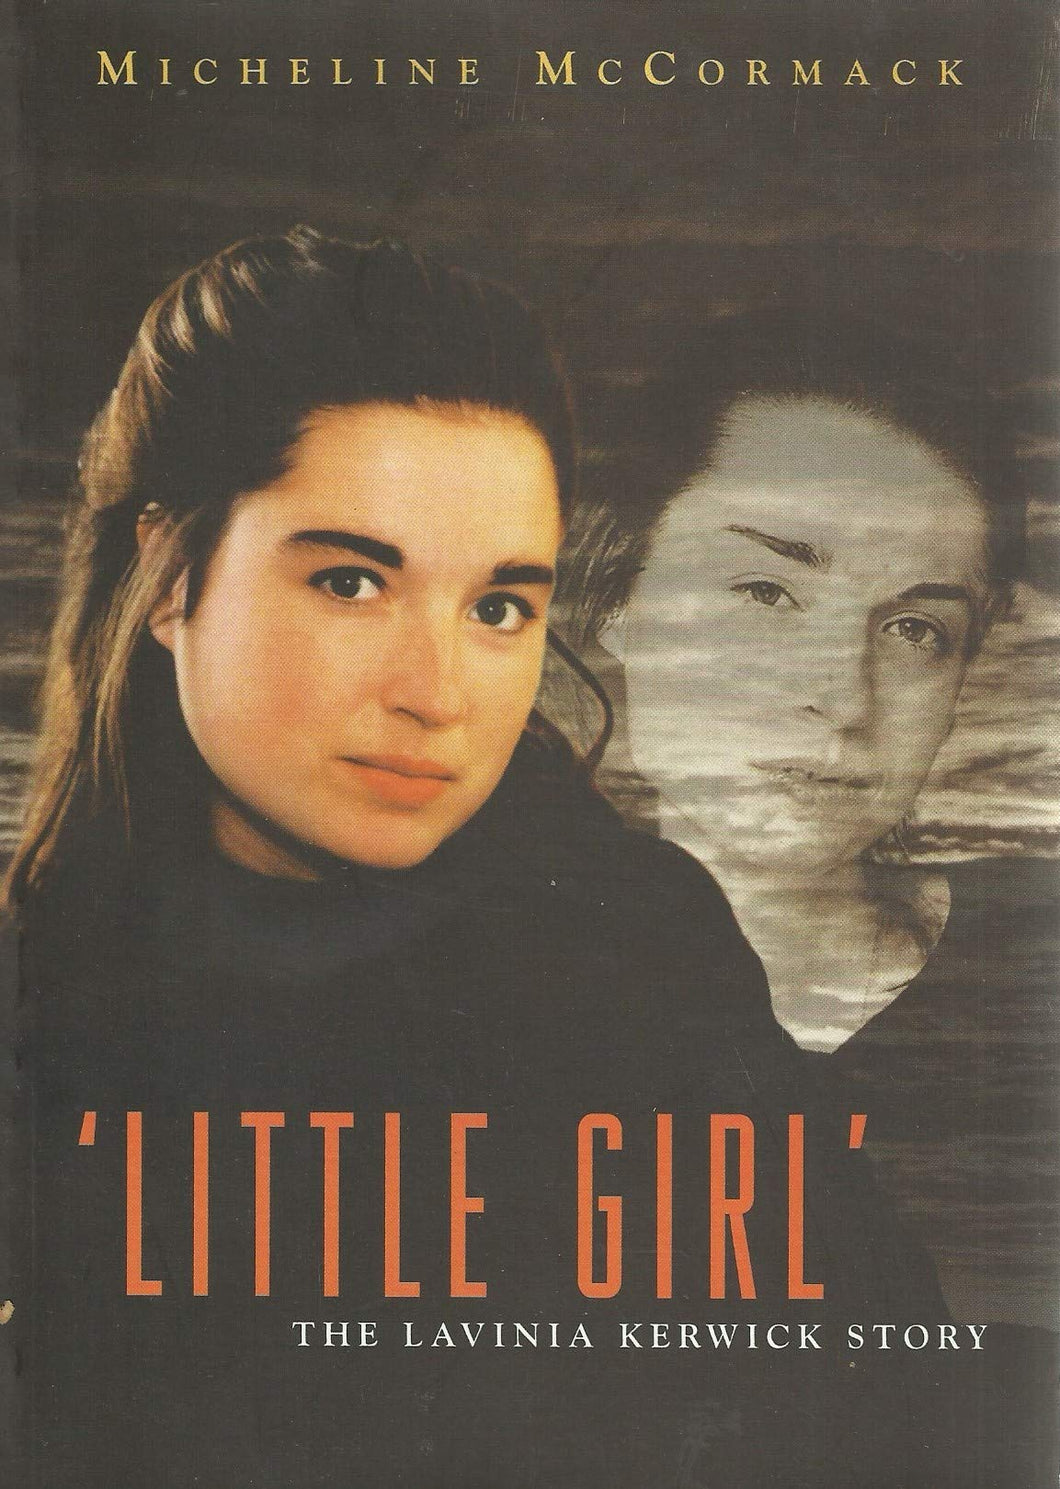 Little girl: The Lavinia Kerwick story